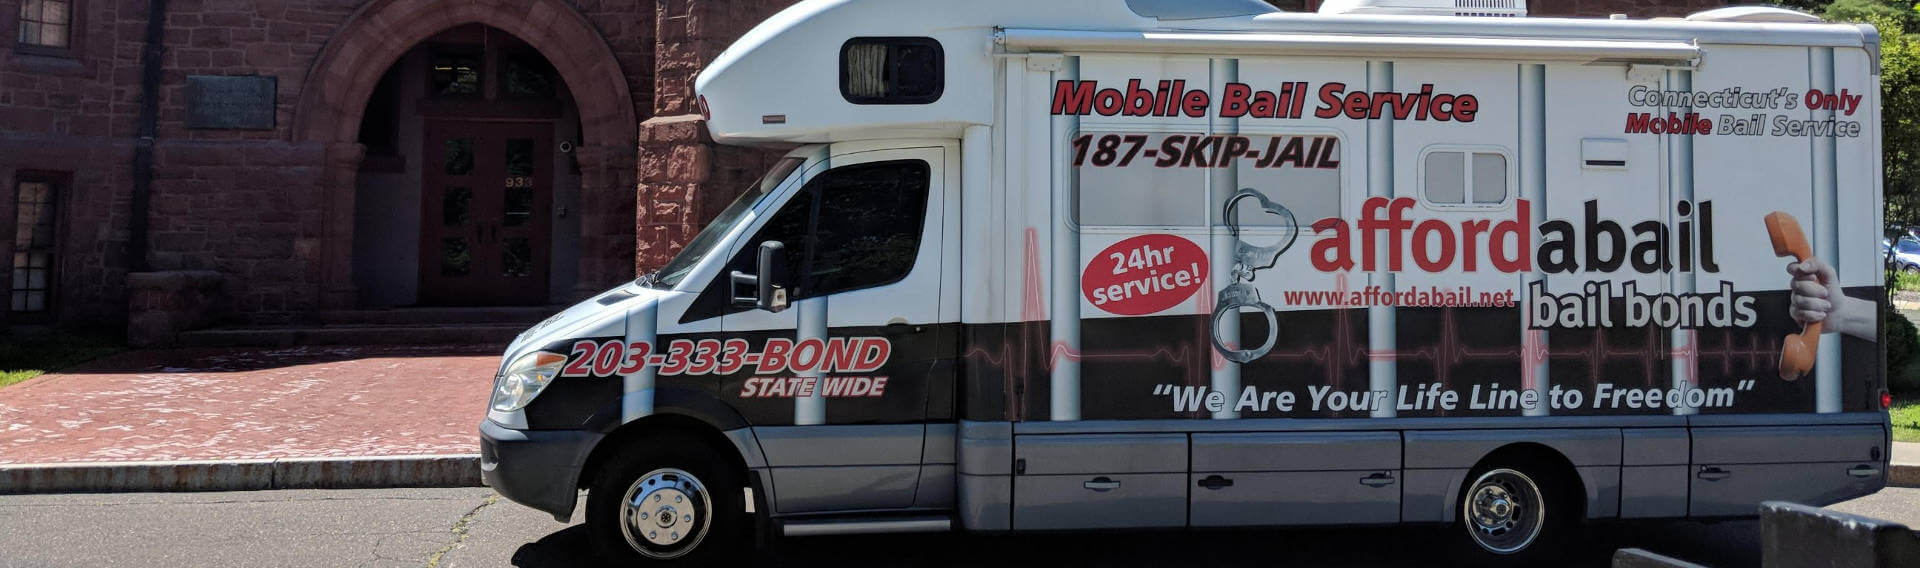 Mobile bail bonds service in Wolcott CT